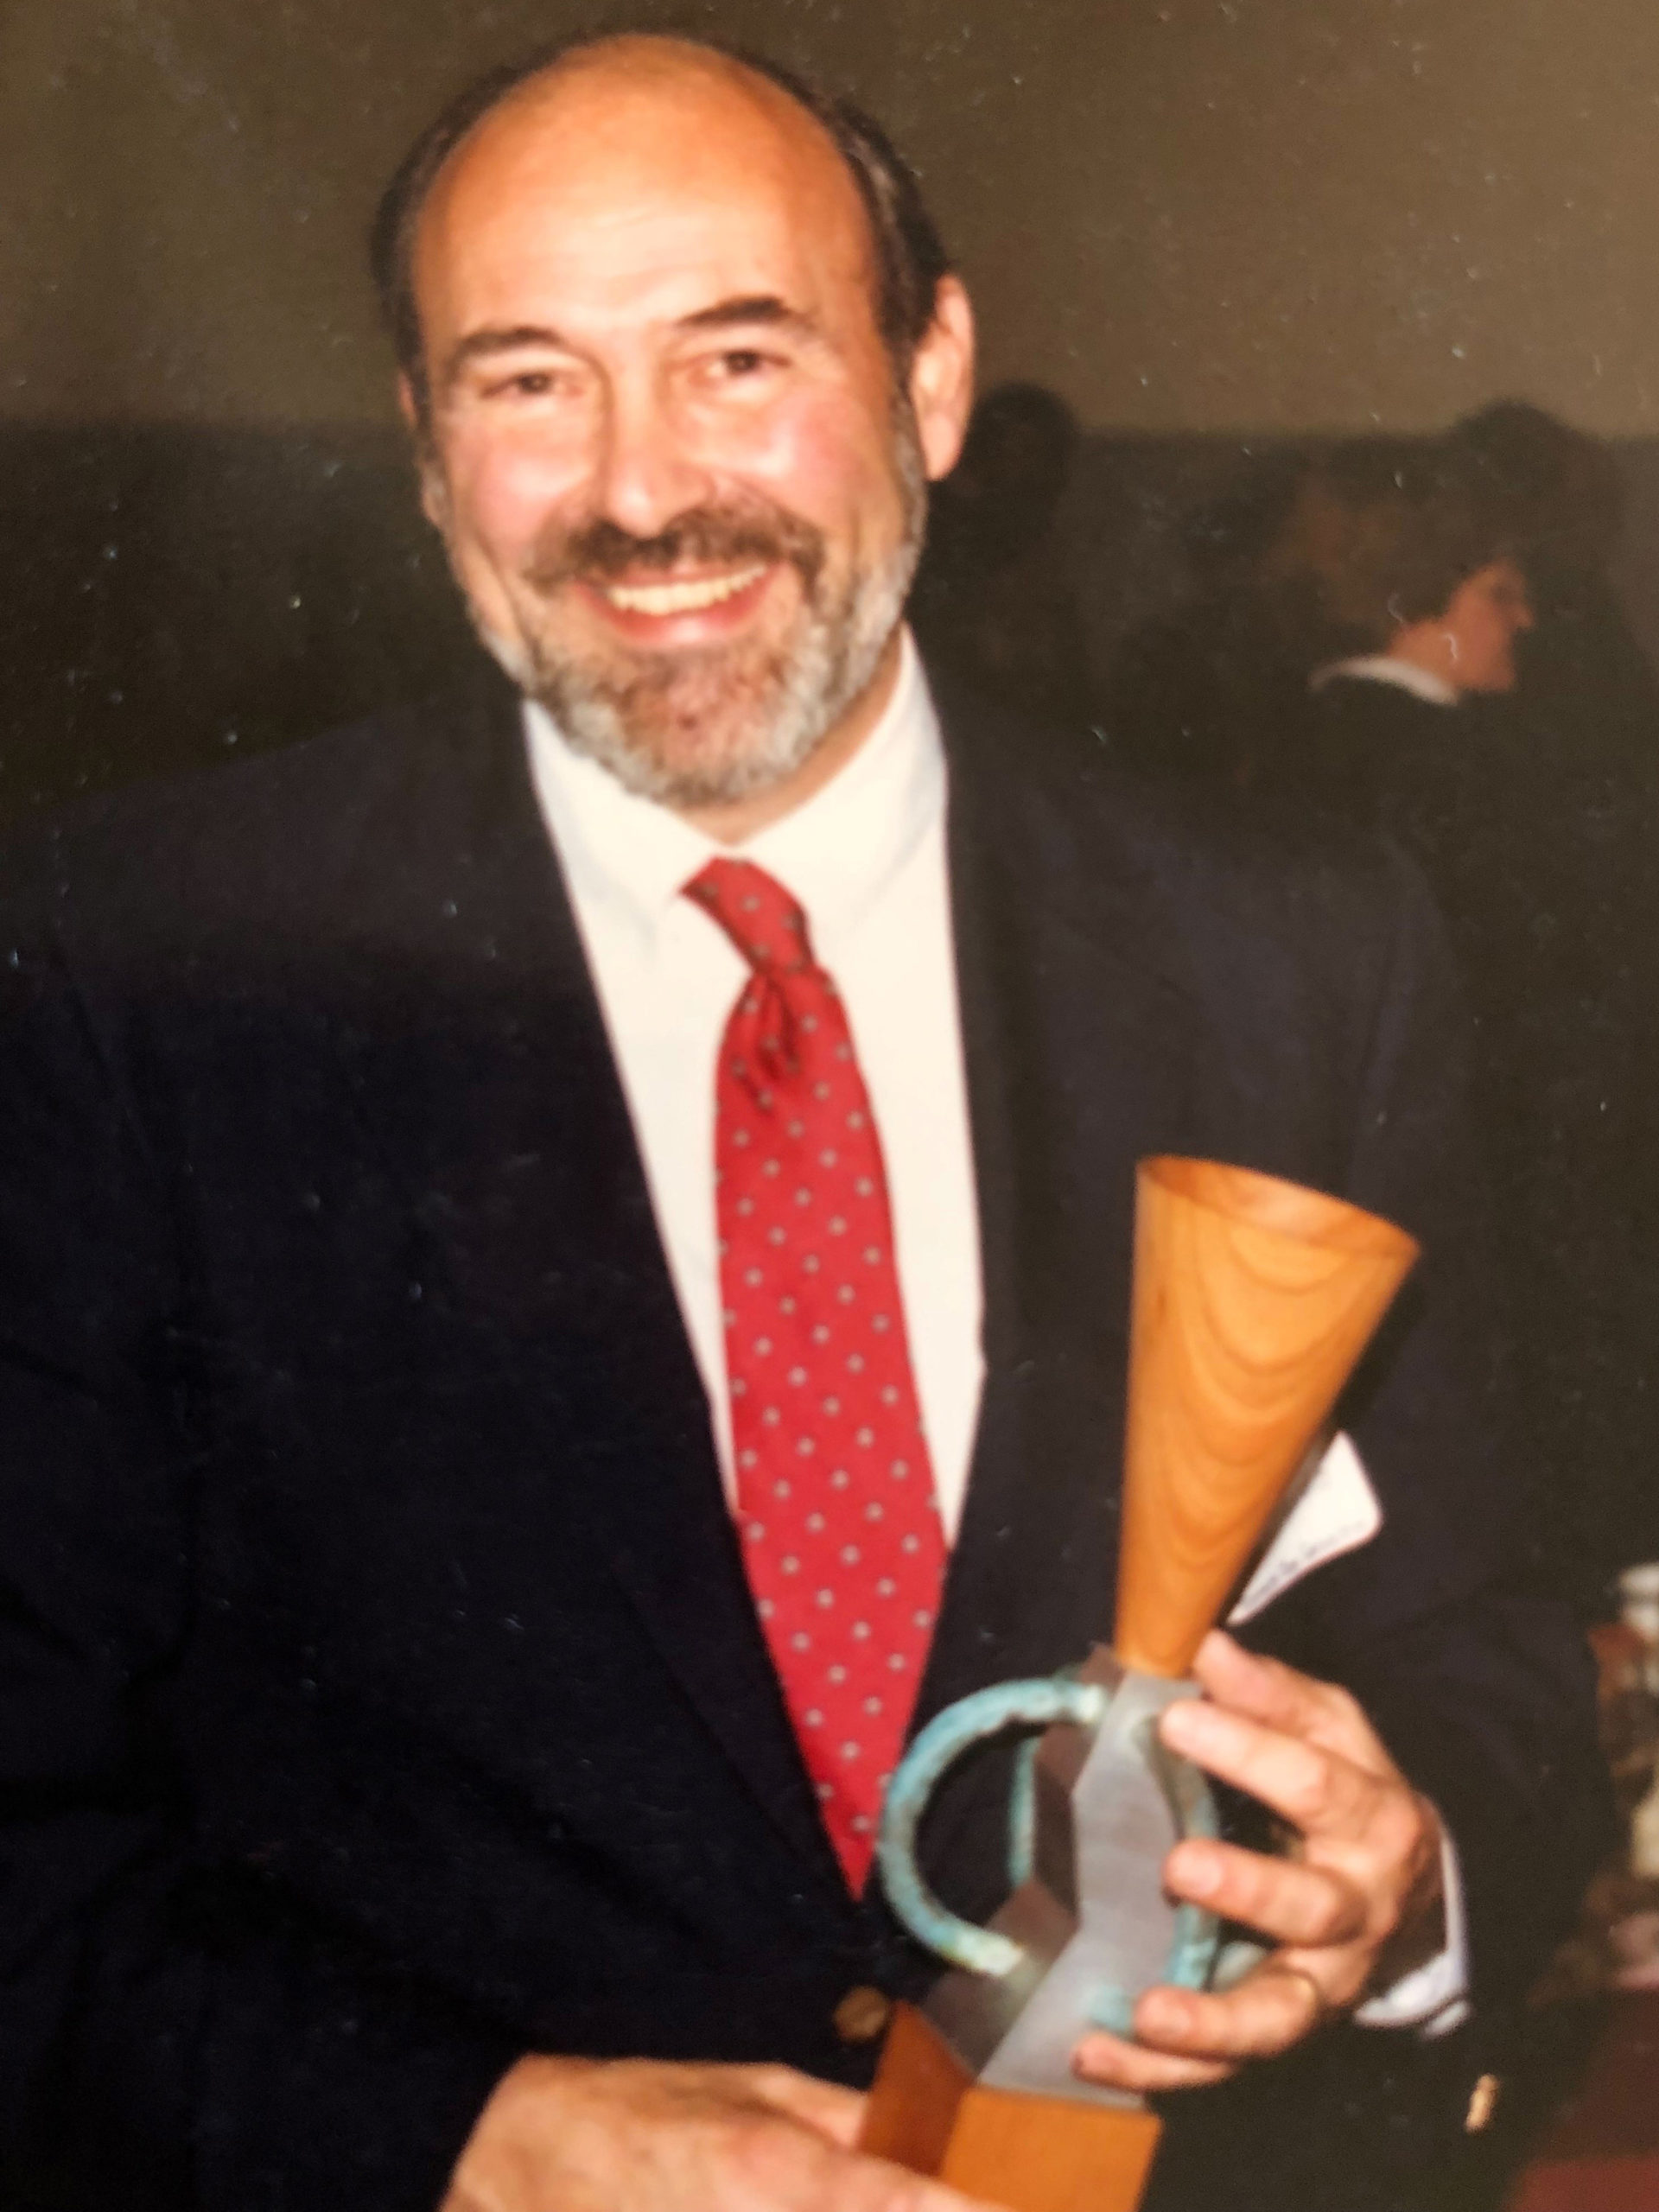 Bob Sperandio holding an award